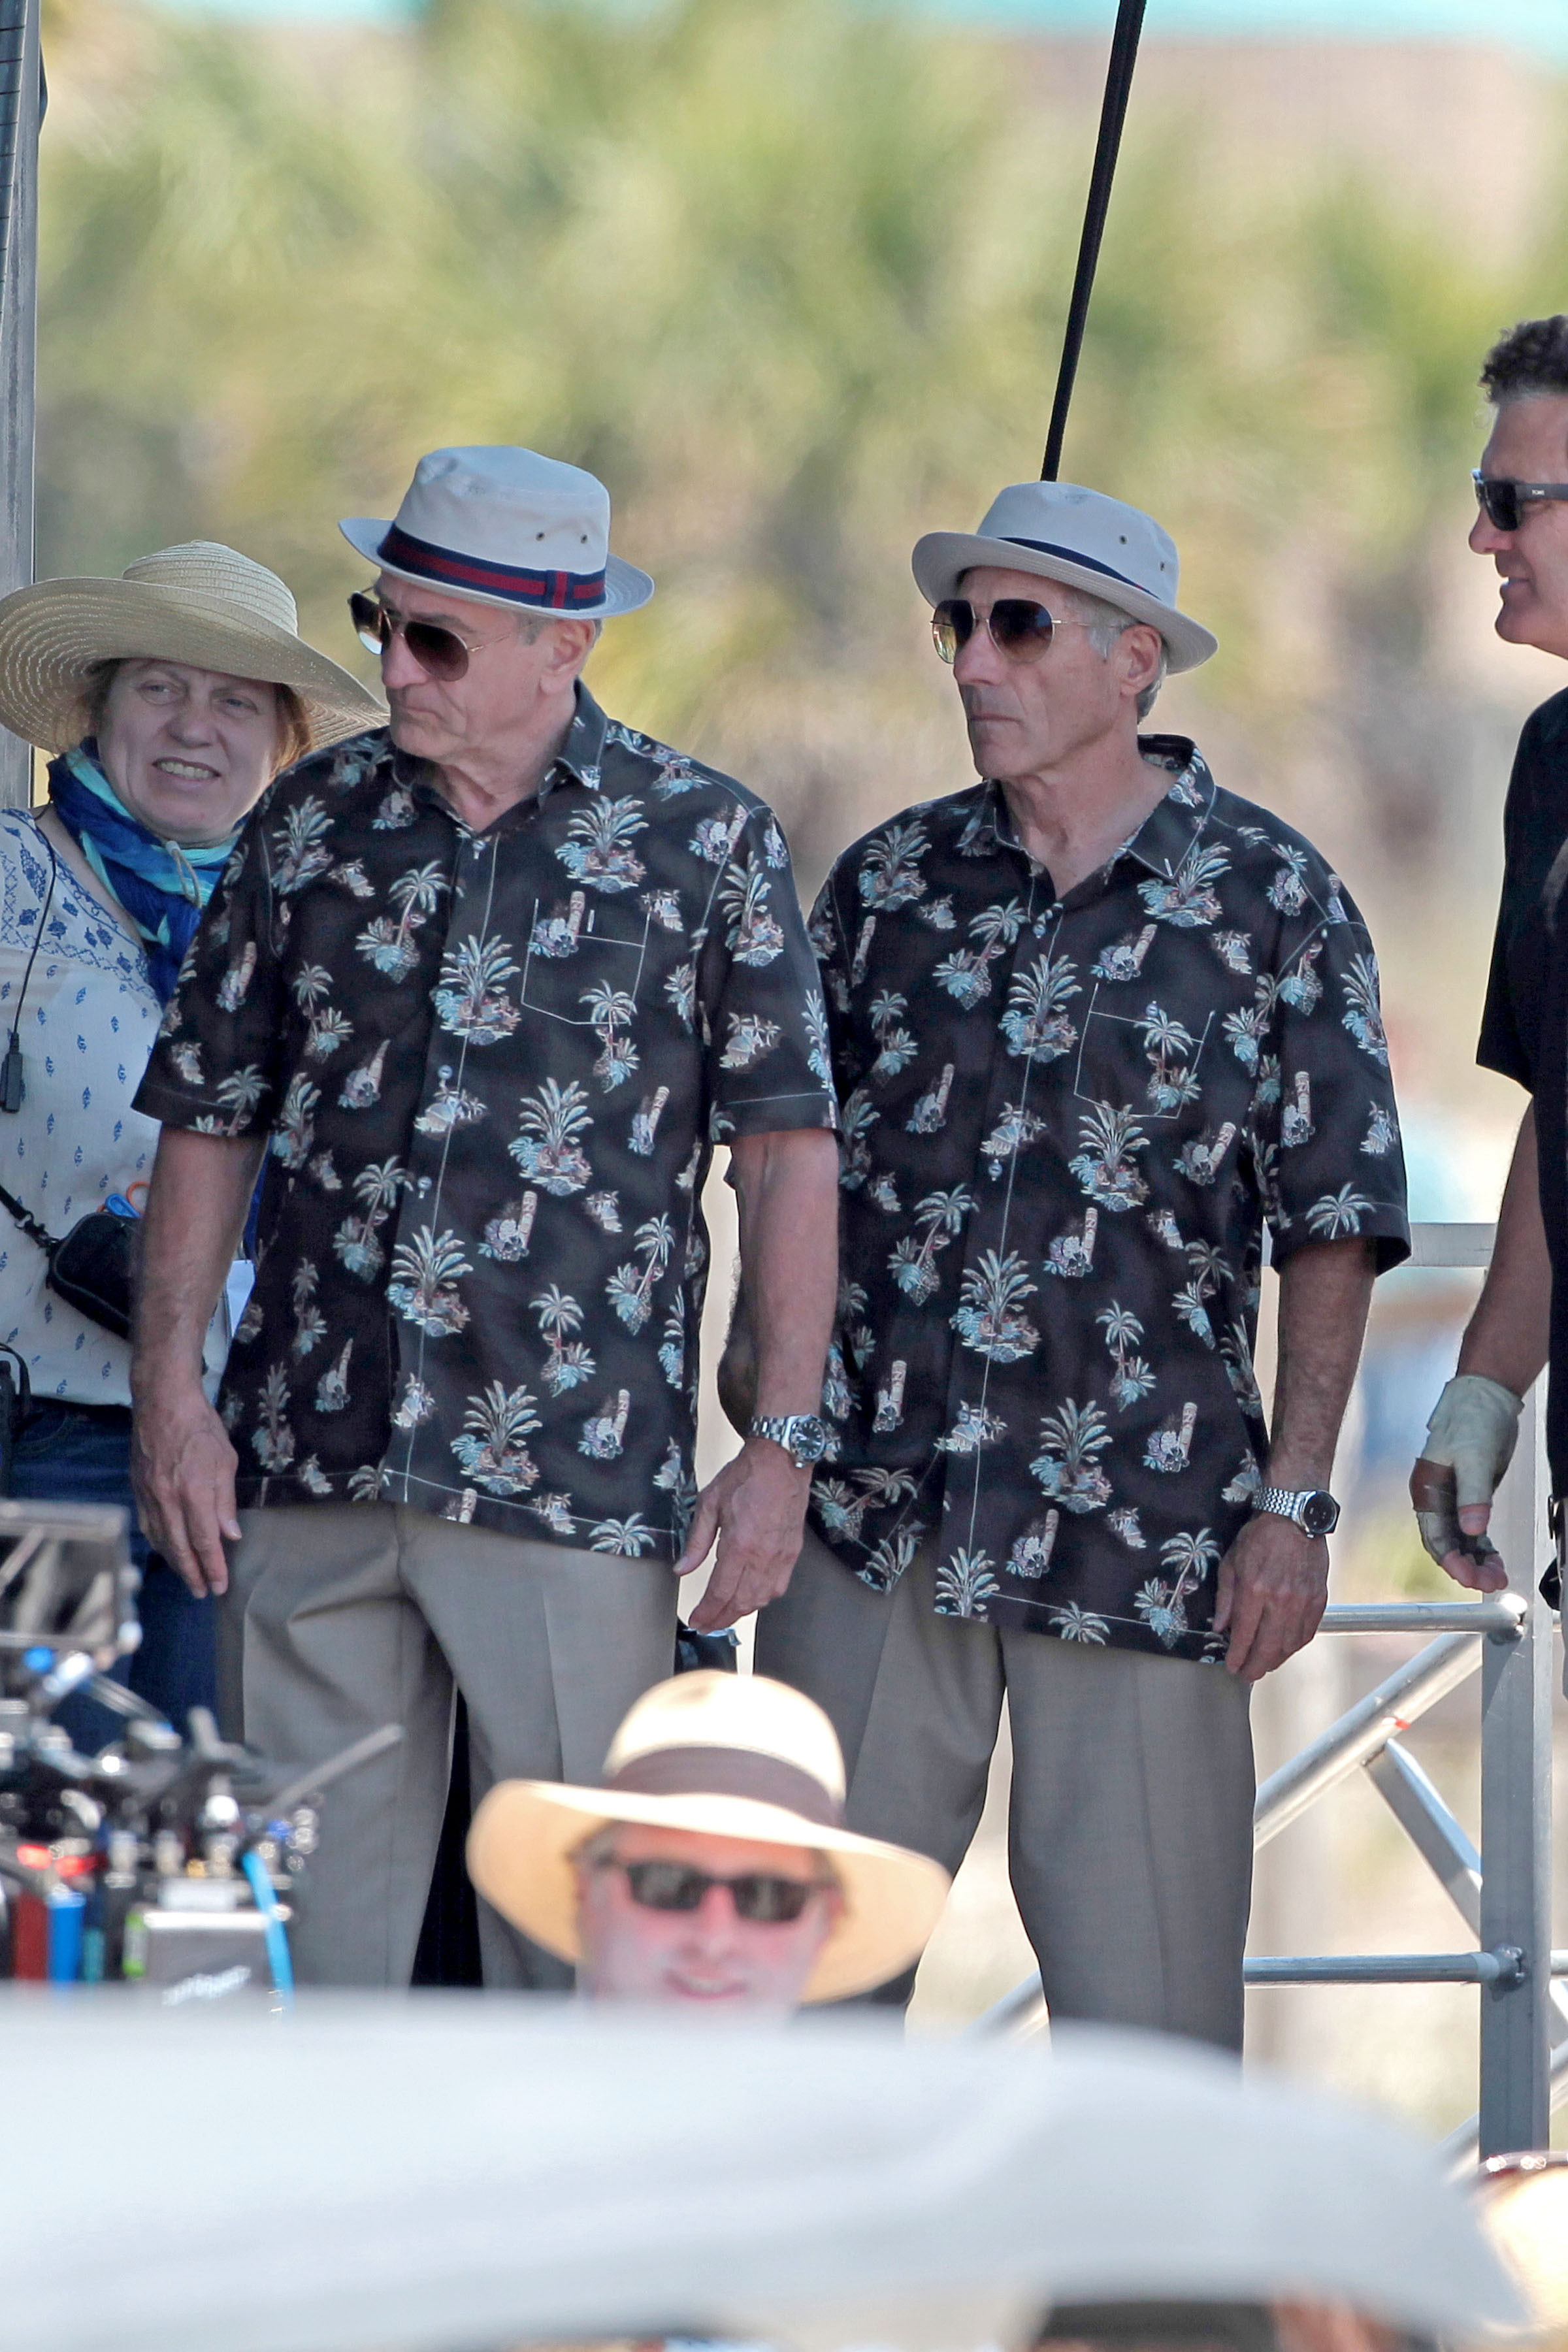 De Niro and his body double wearing Hawaiian shirts, sunglasses, and brimmed hats